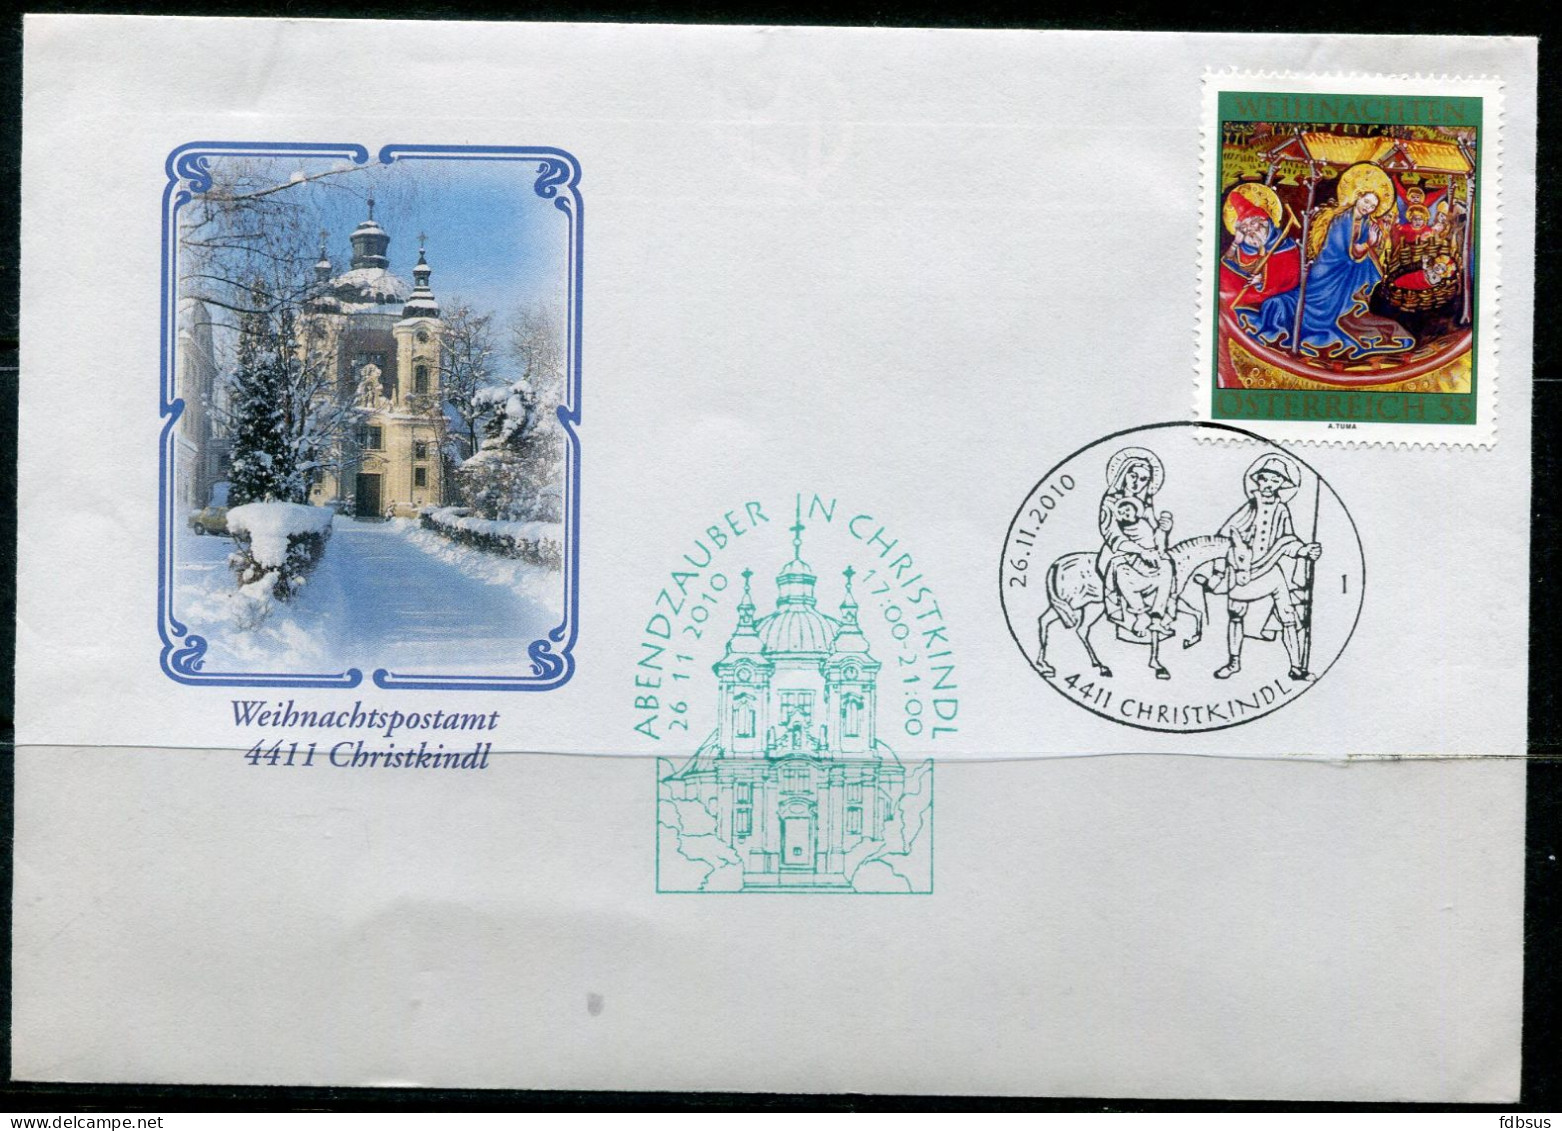 26-11-2010 Christkindl Cover Noel Christmas Navidad Weihnachten - See Sonderstempel And Briefmarken - - Covers & Documents